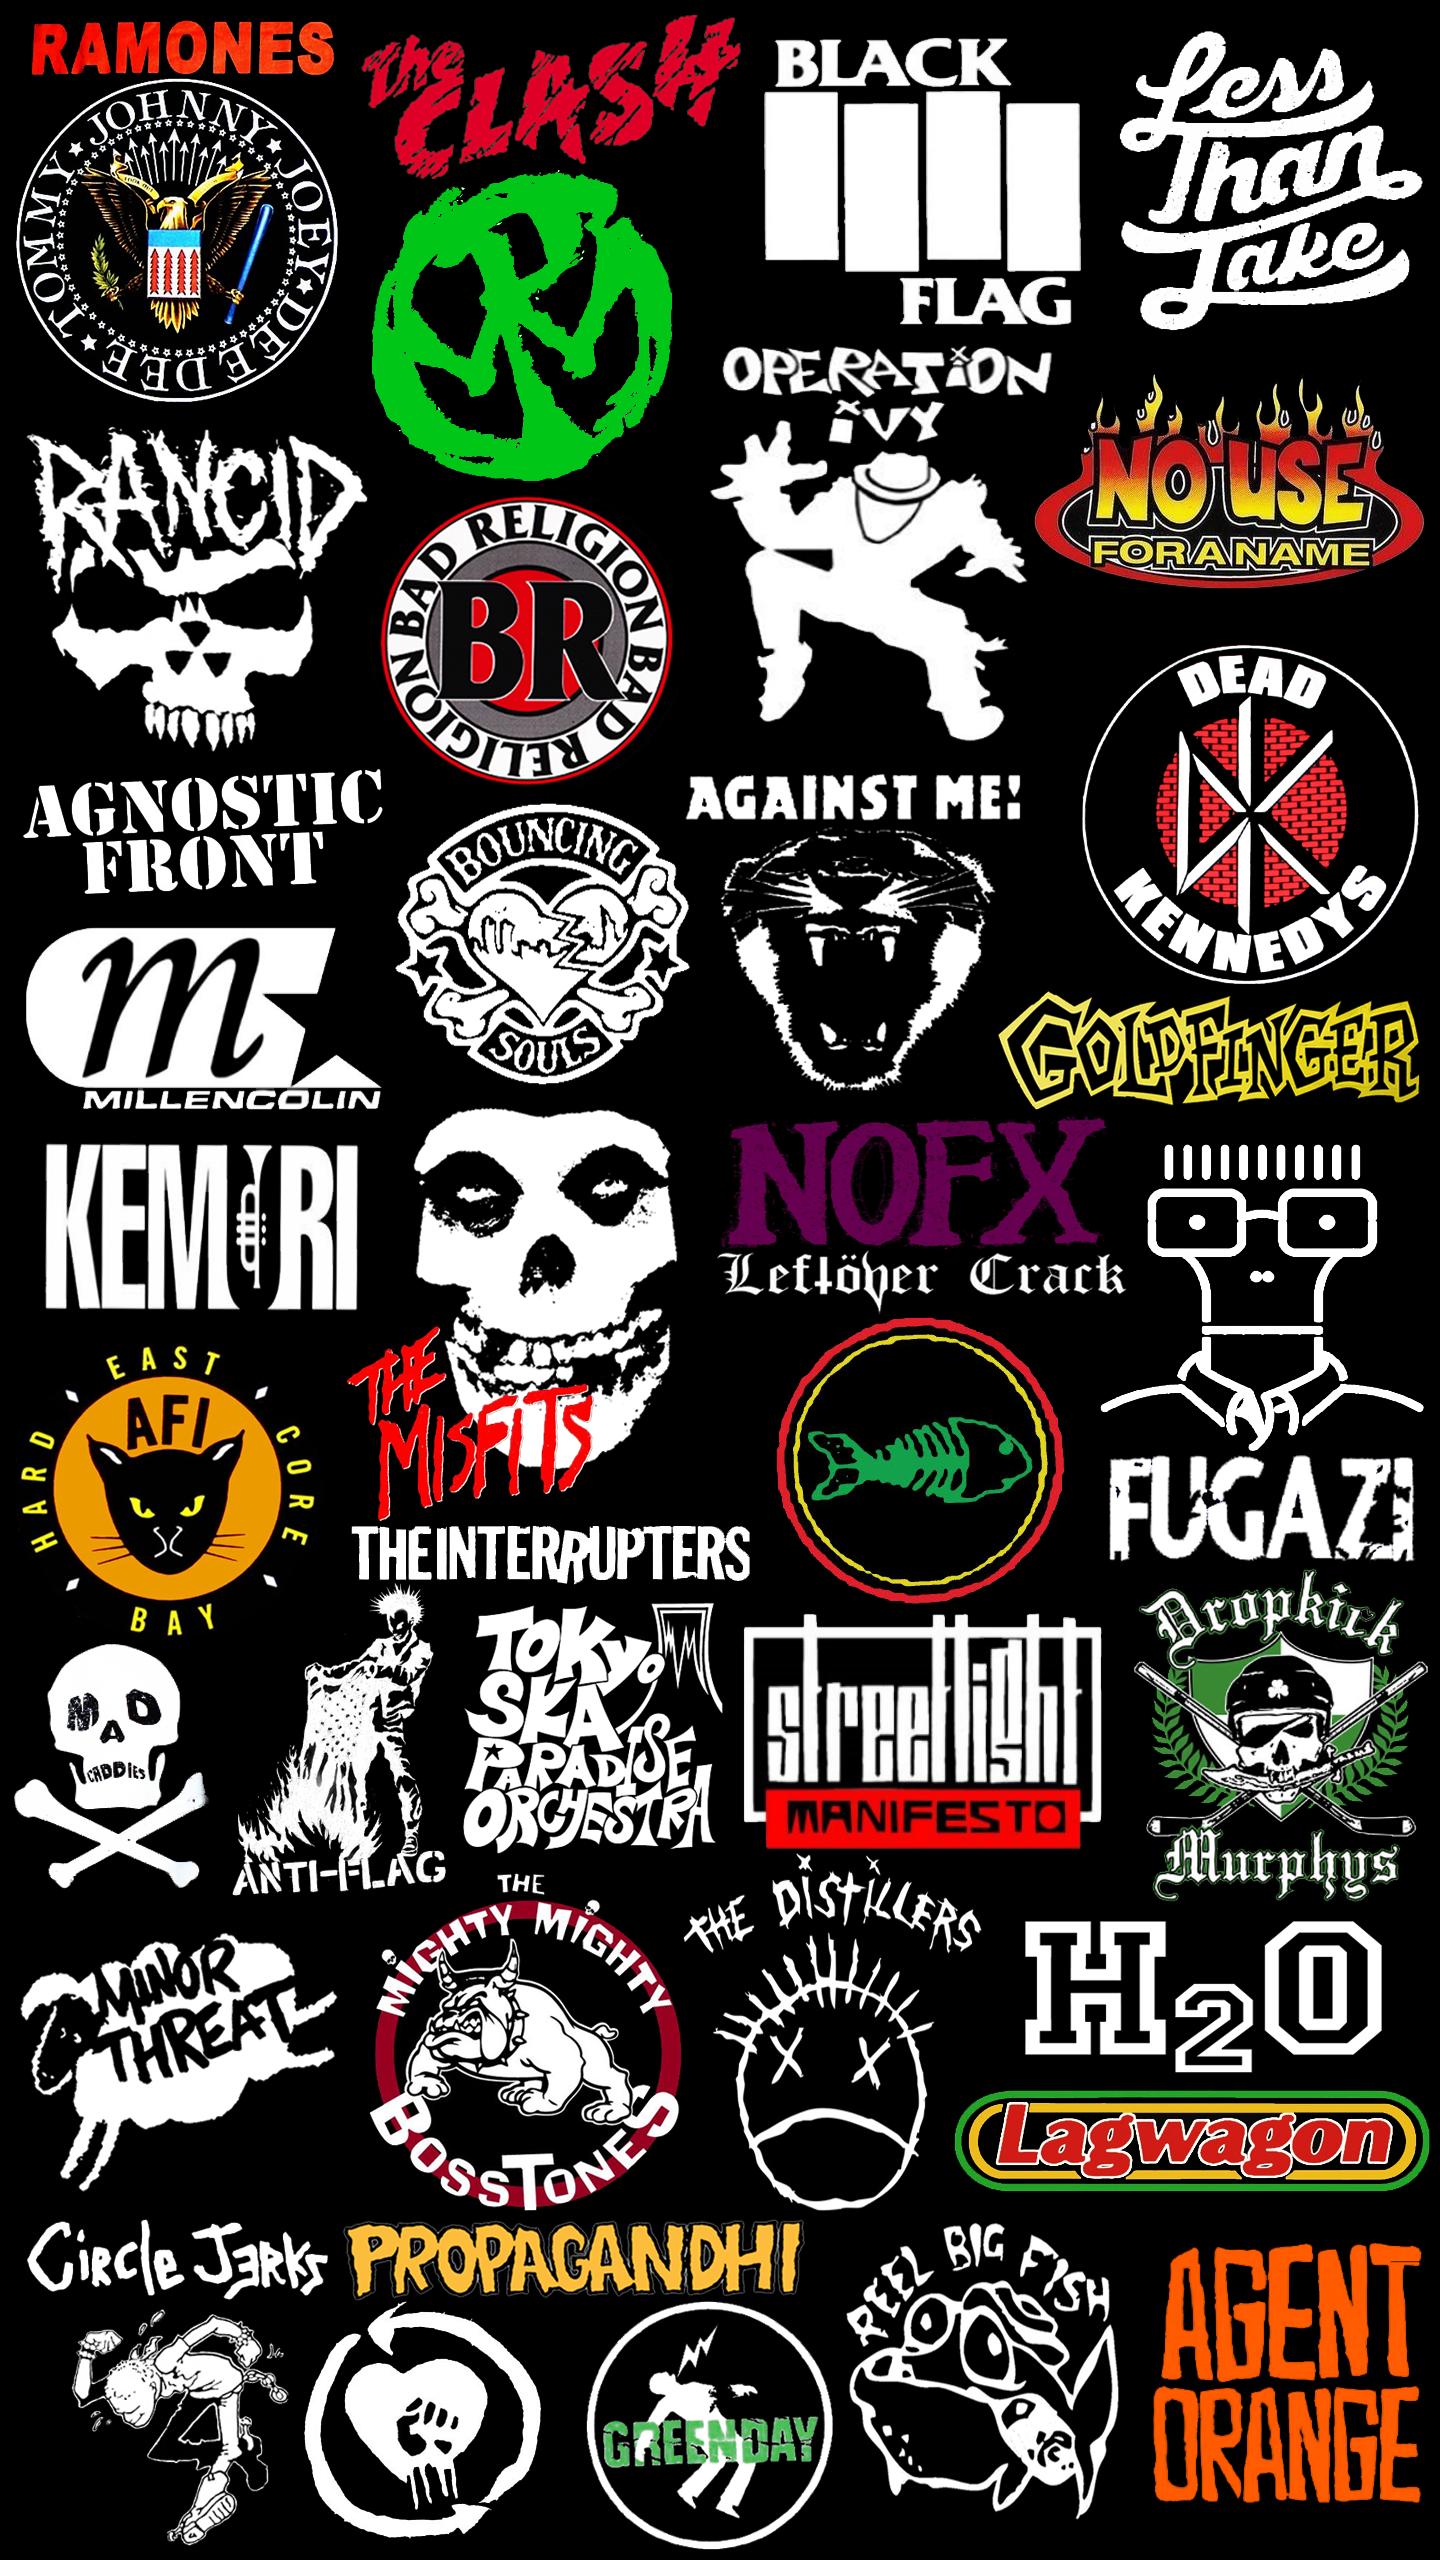 Punk Rock Band Logos